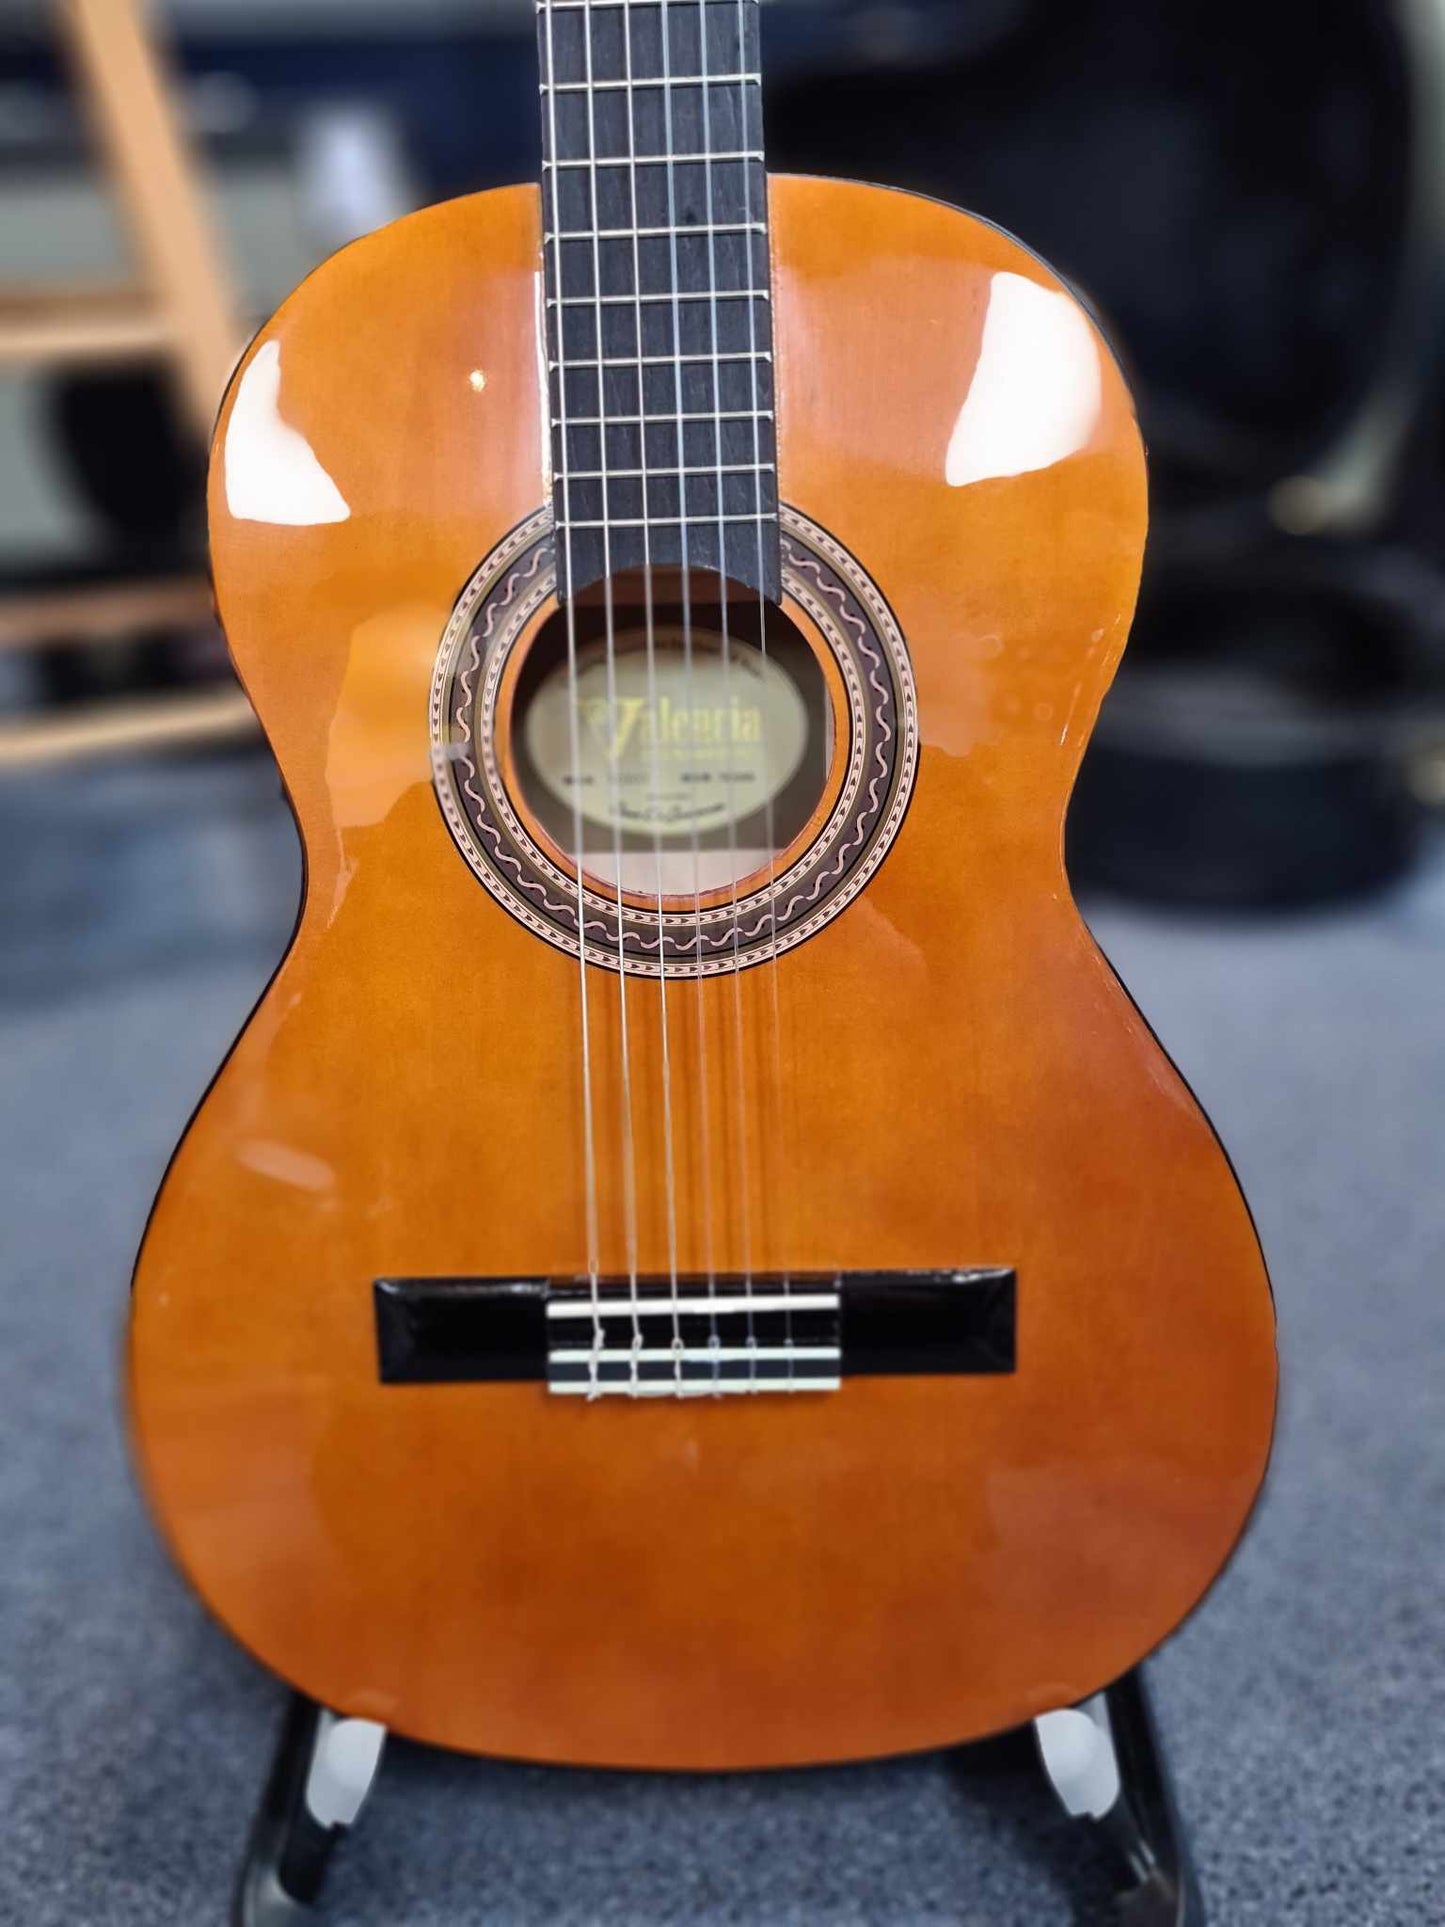 Valencia VC103 3/4 Size Nylon String Guitar